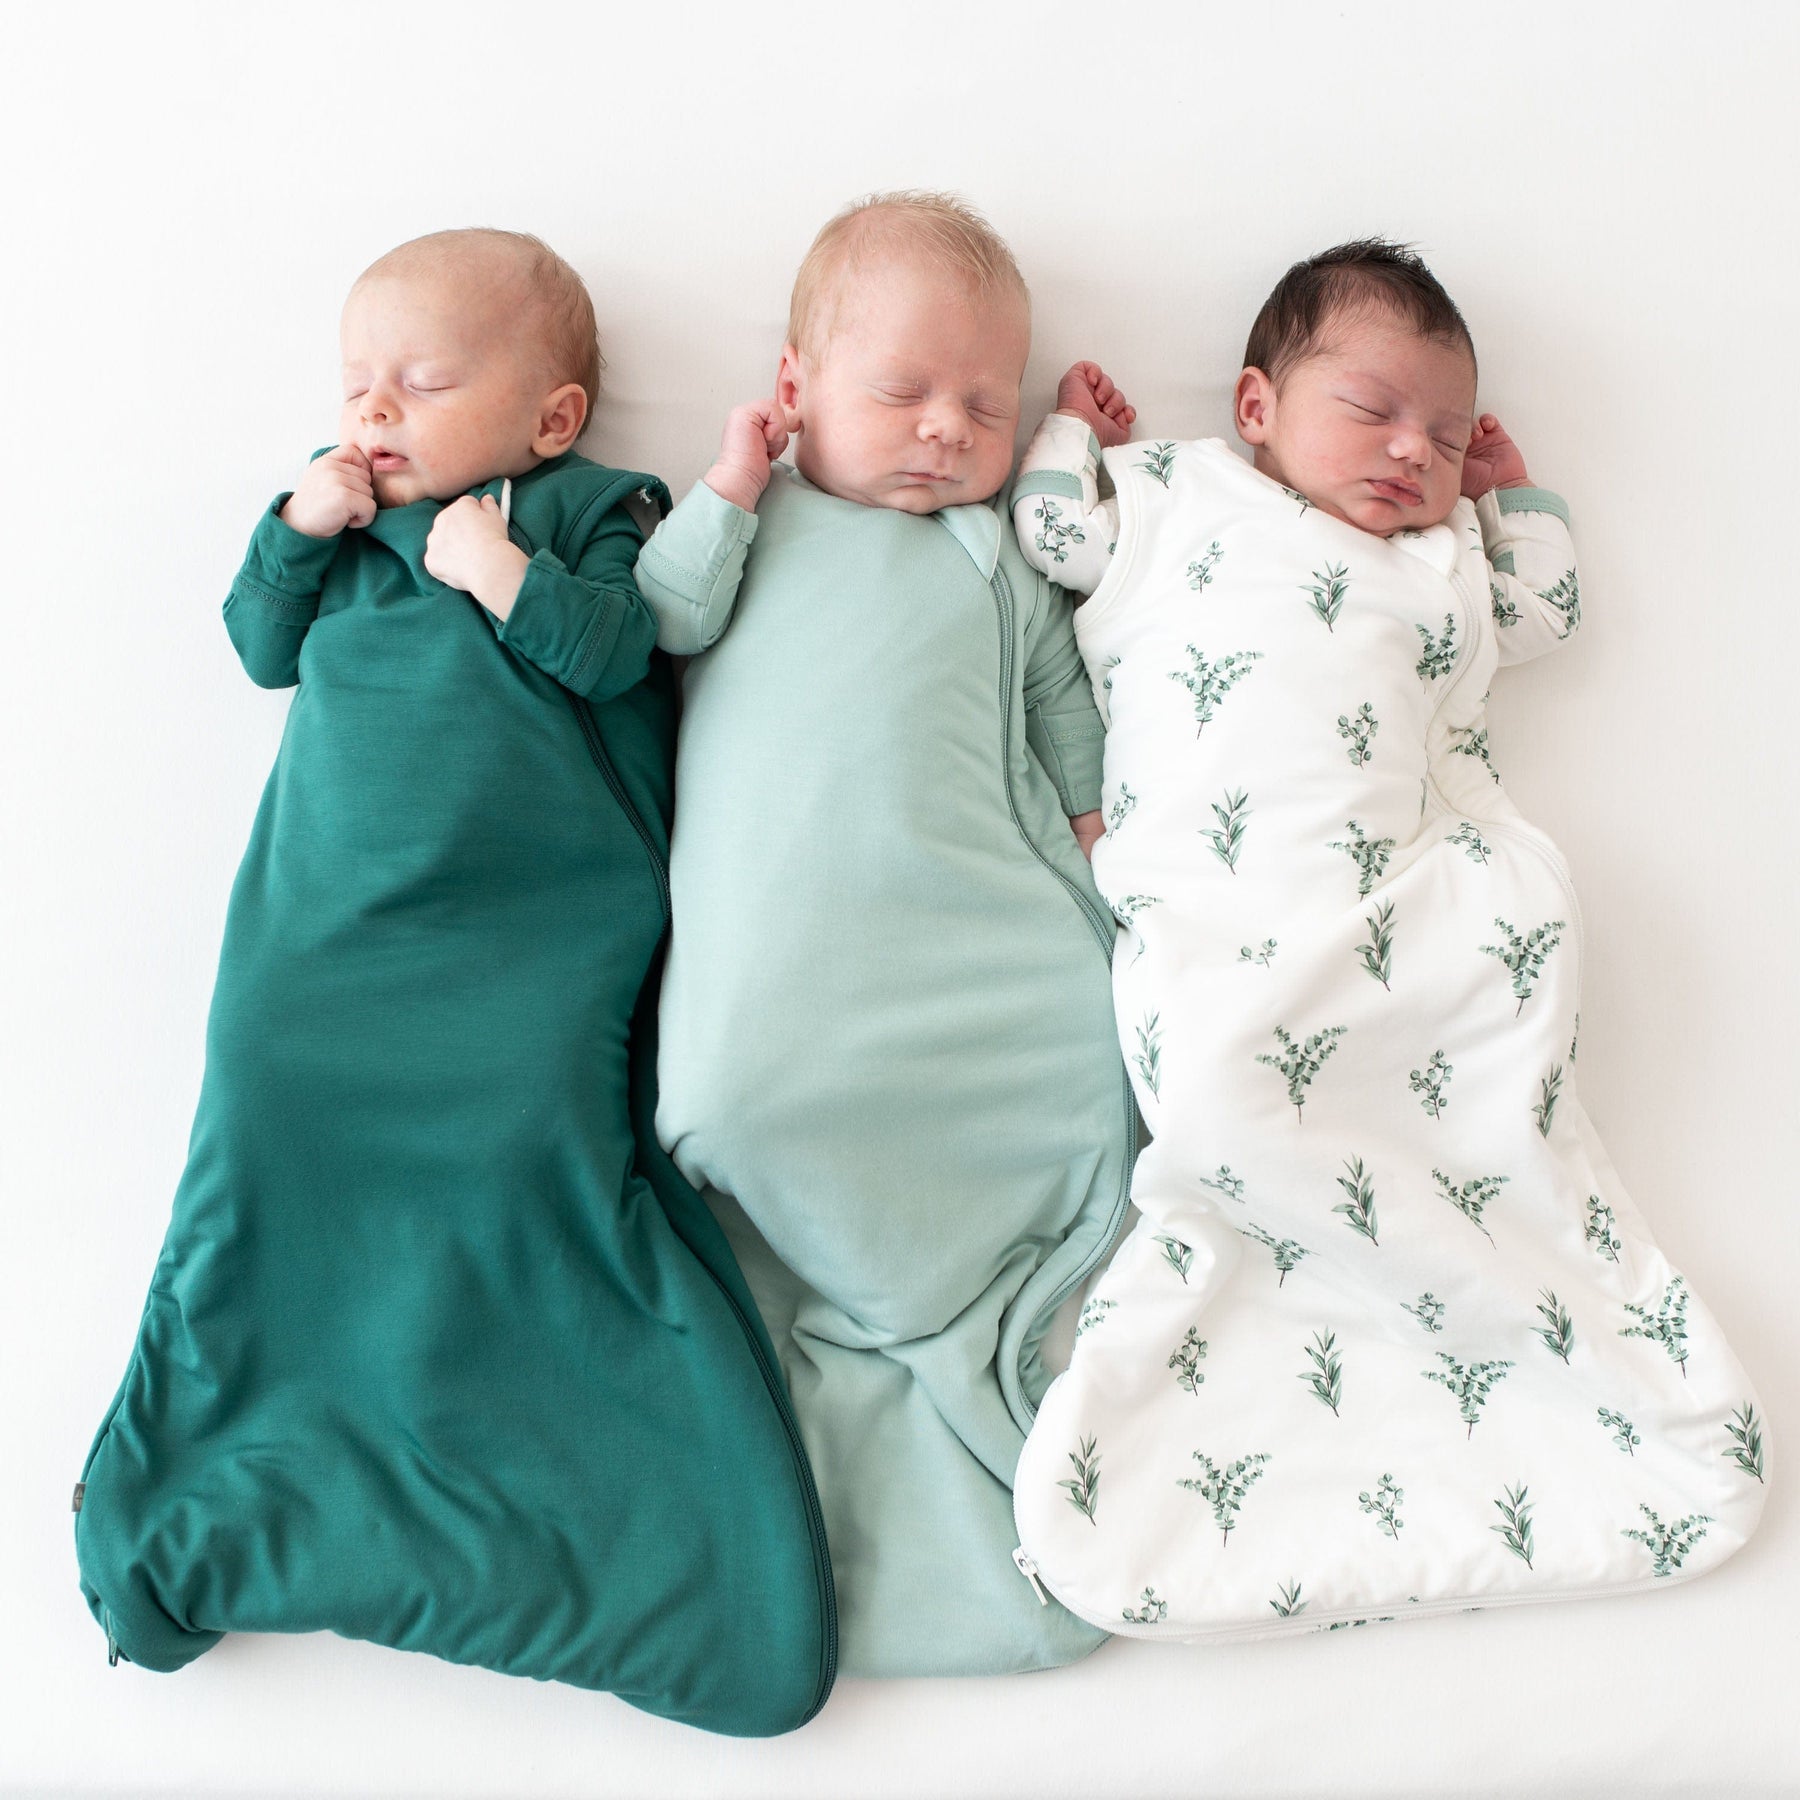 Babies wearing Kyte Baby sleep bags TOG 1.0 in shades of green